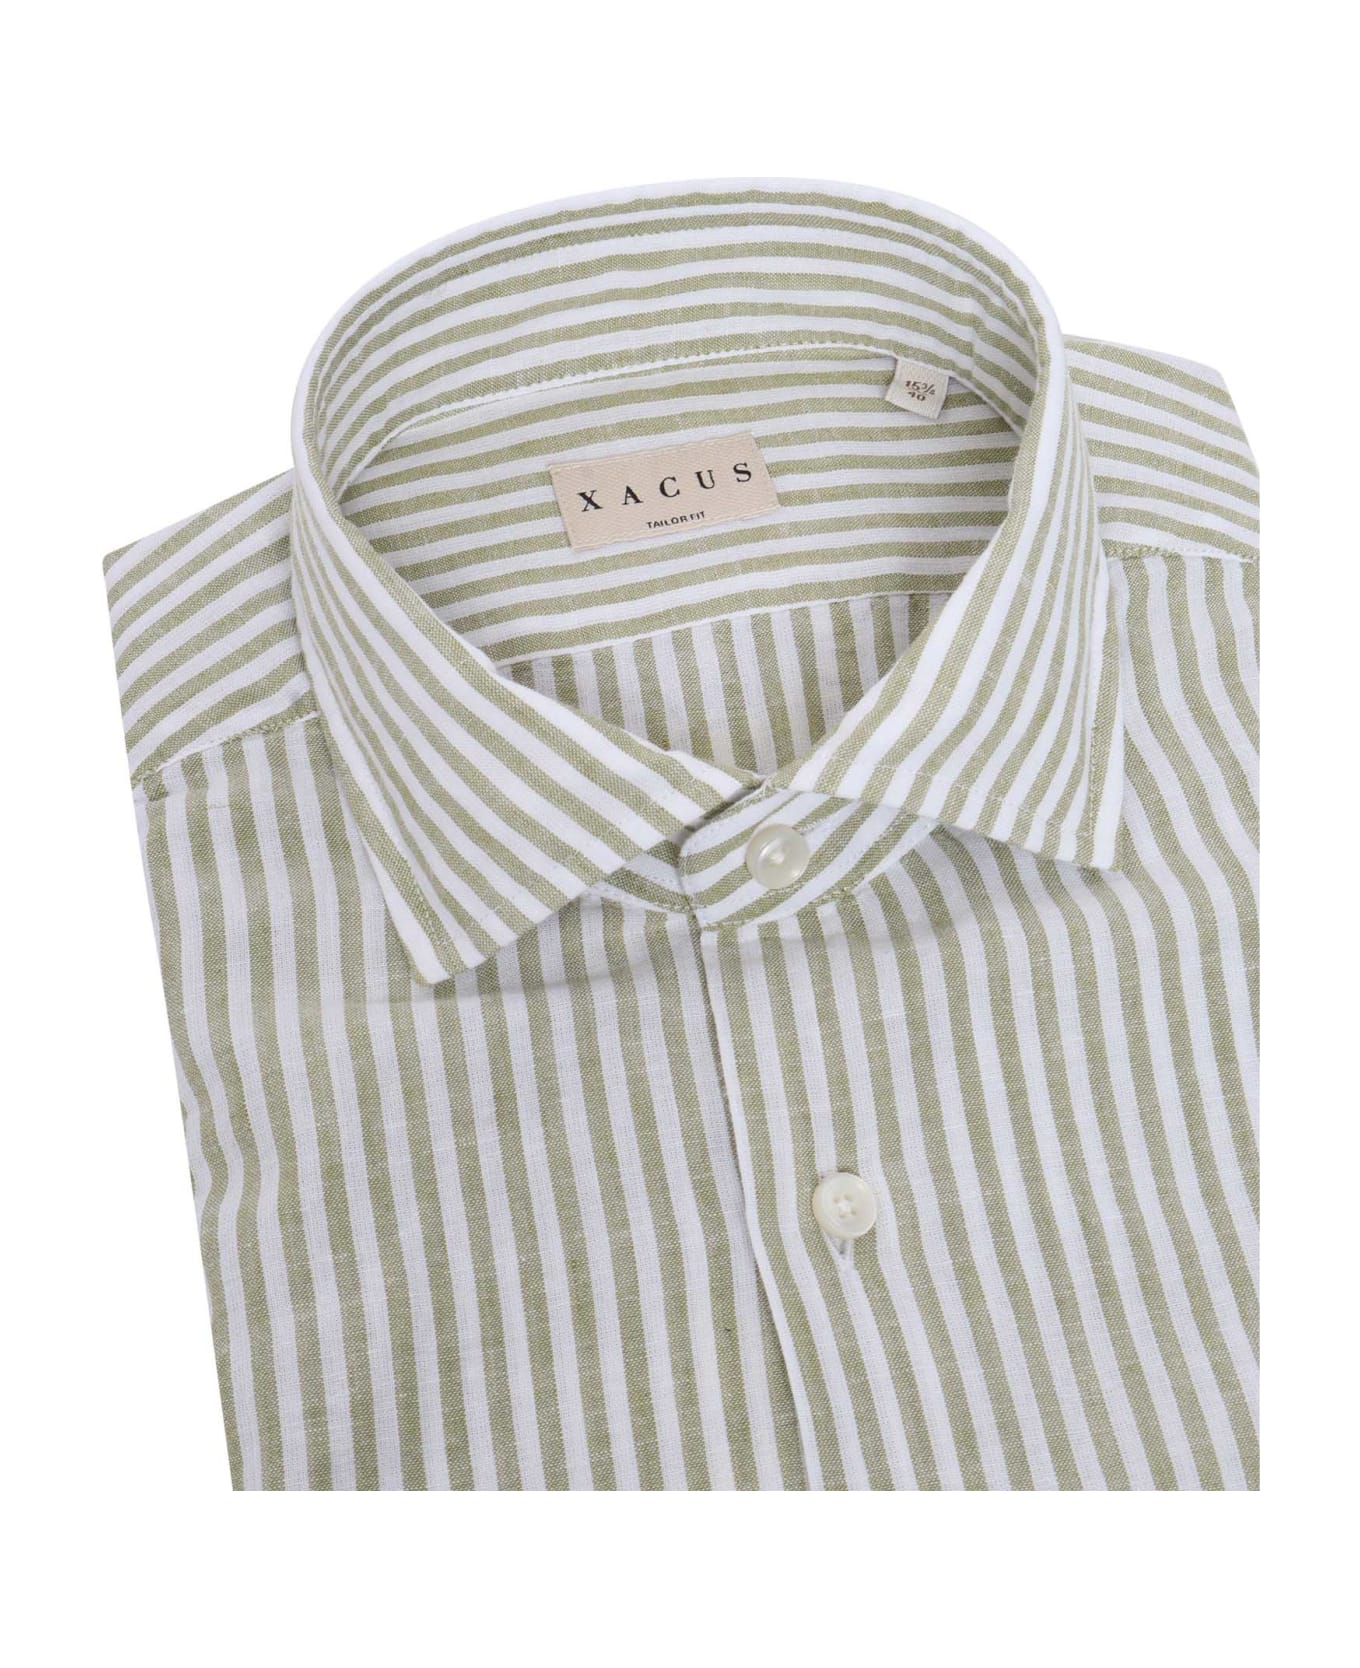 Xacus Striped Shirt - MULTICOLOR シャツ